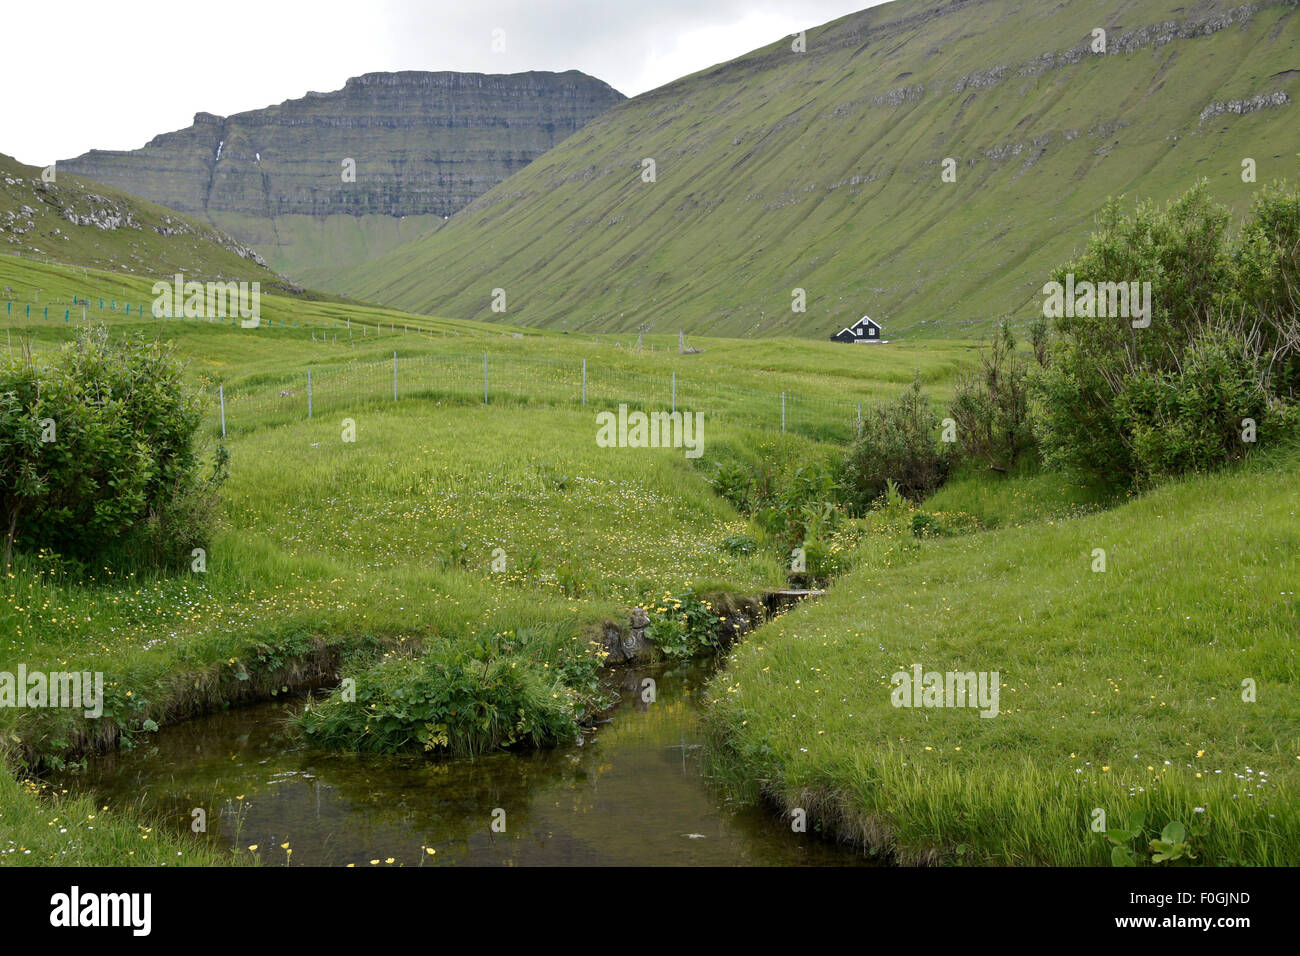 Lone house at foot of mountain near village of Gjogv, Eysturoy, Faroe Islands Stock Photo